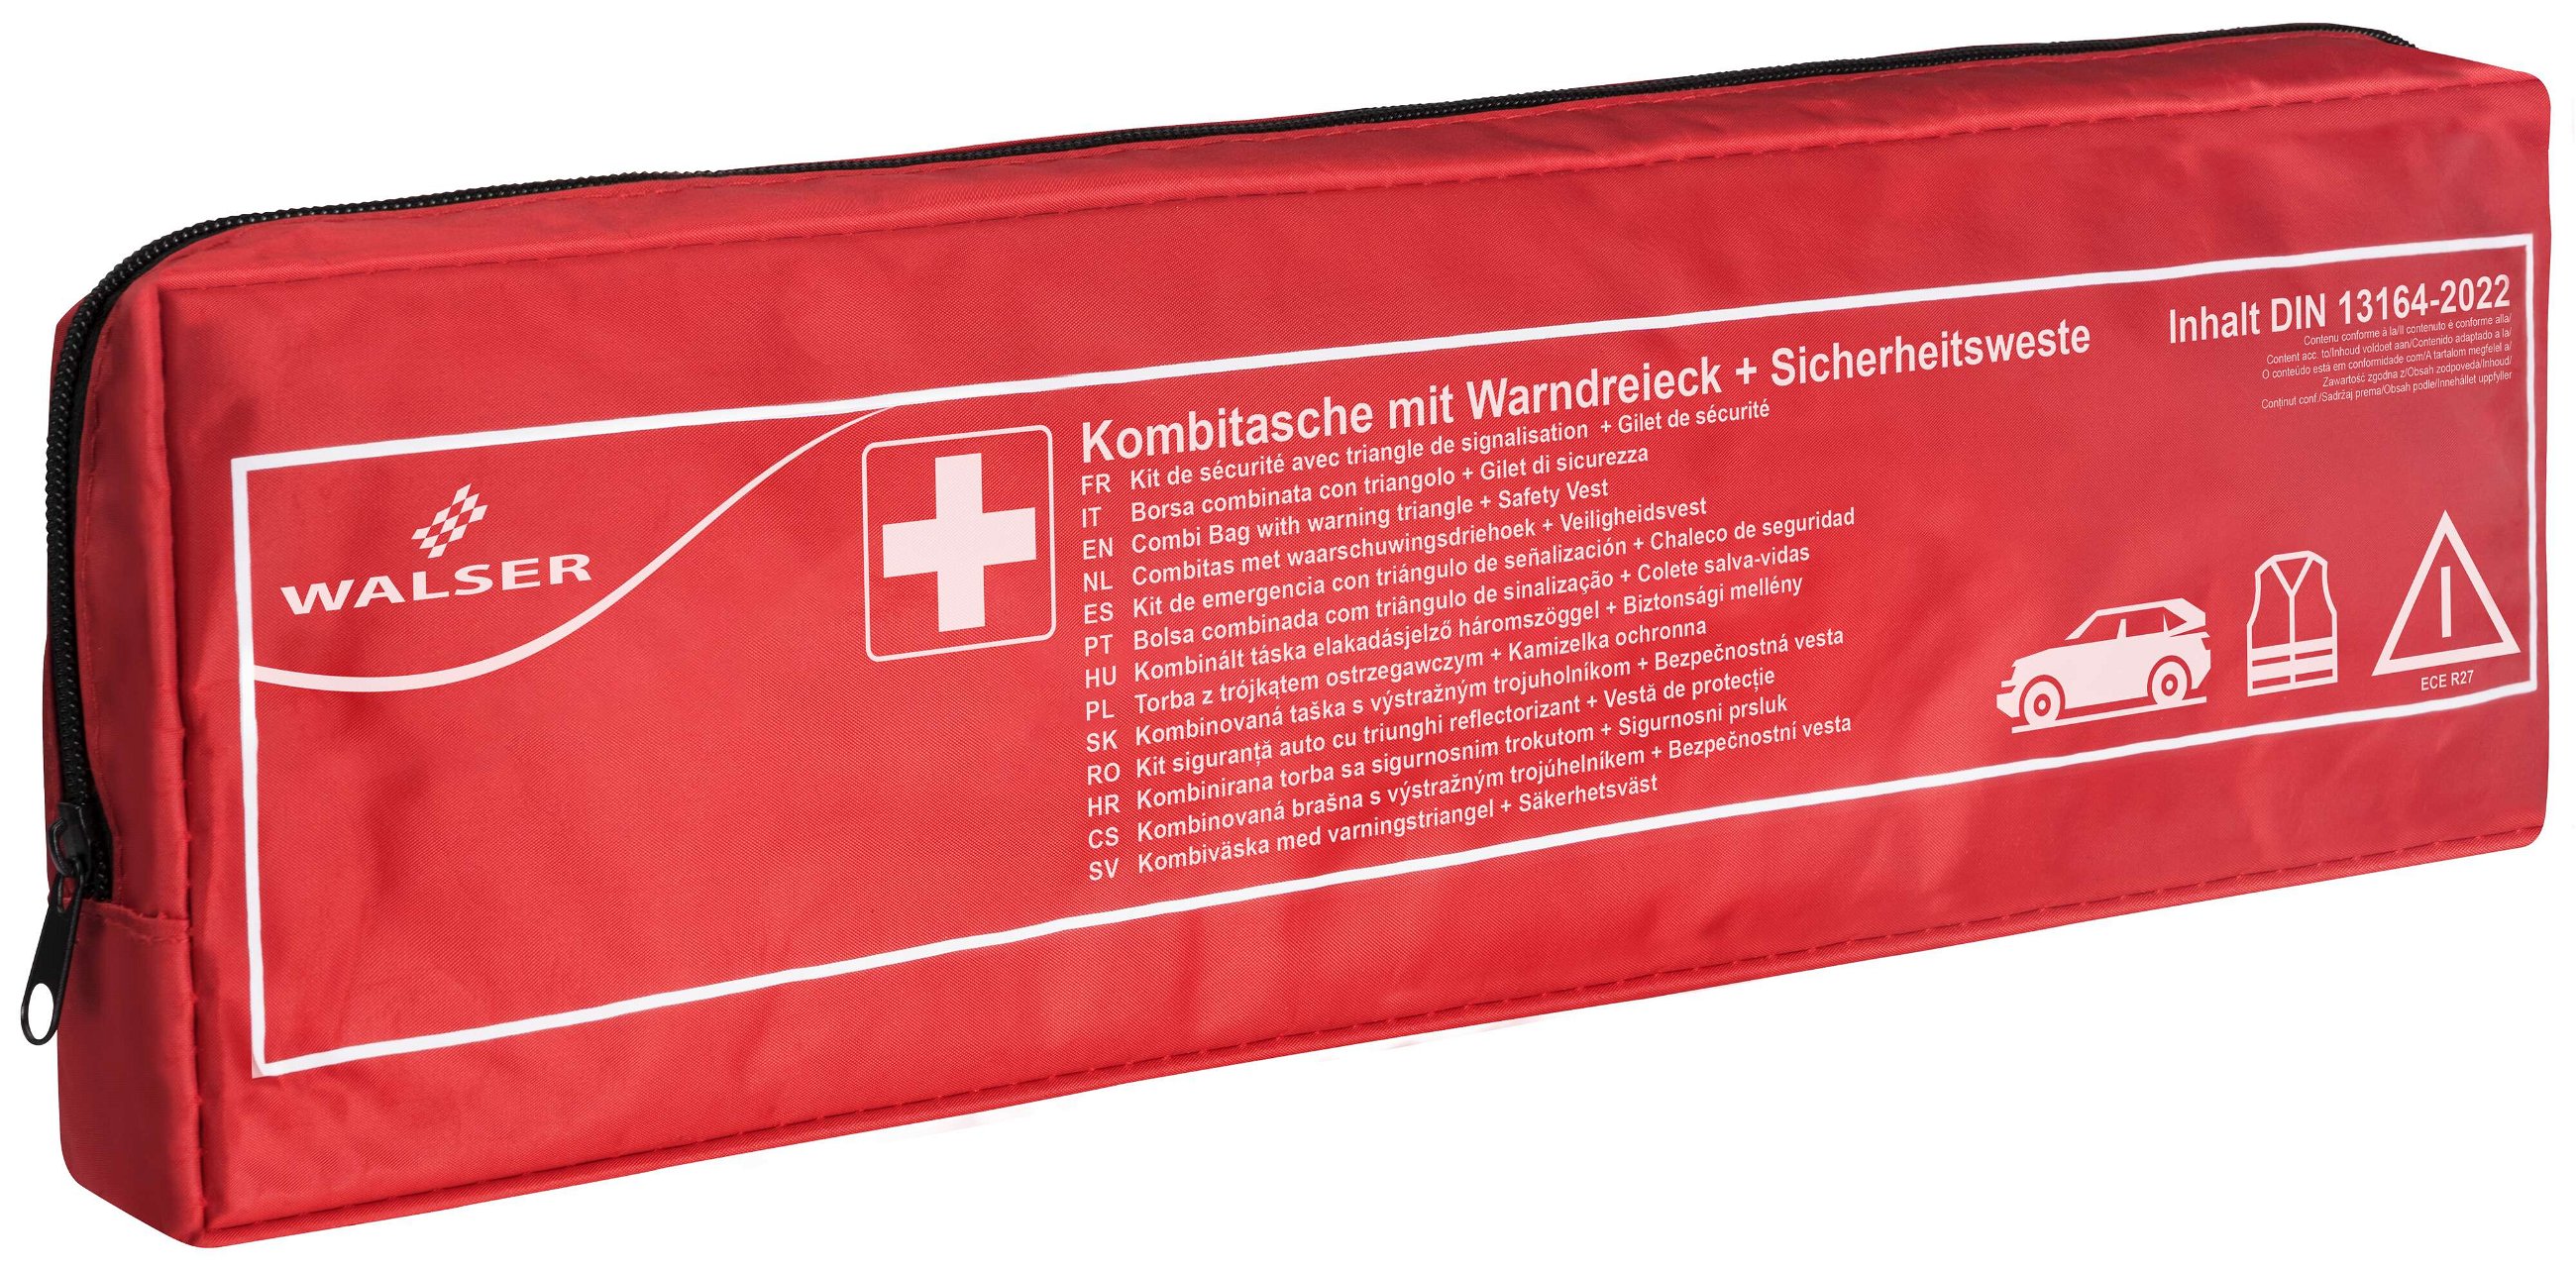 KFZ-Kombitasche 3 teilig Rot Warndreieck, Verbandskasten, Warnweste